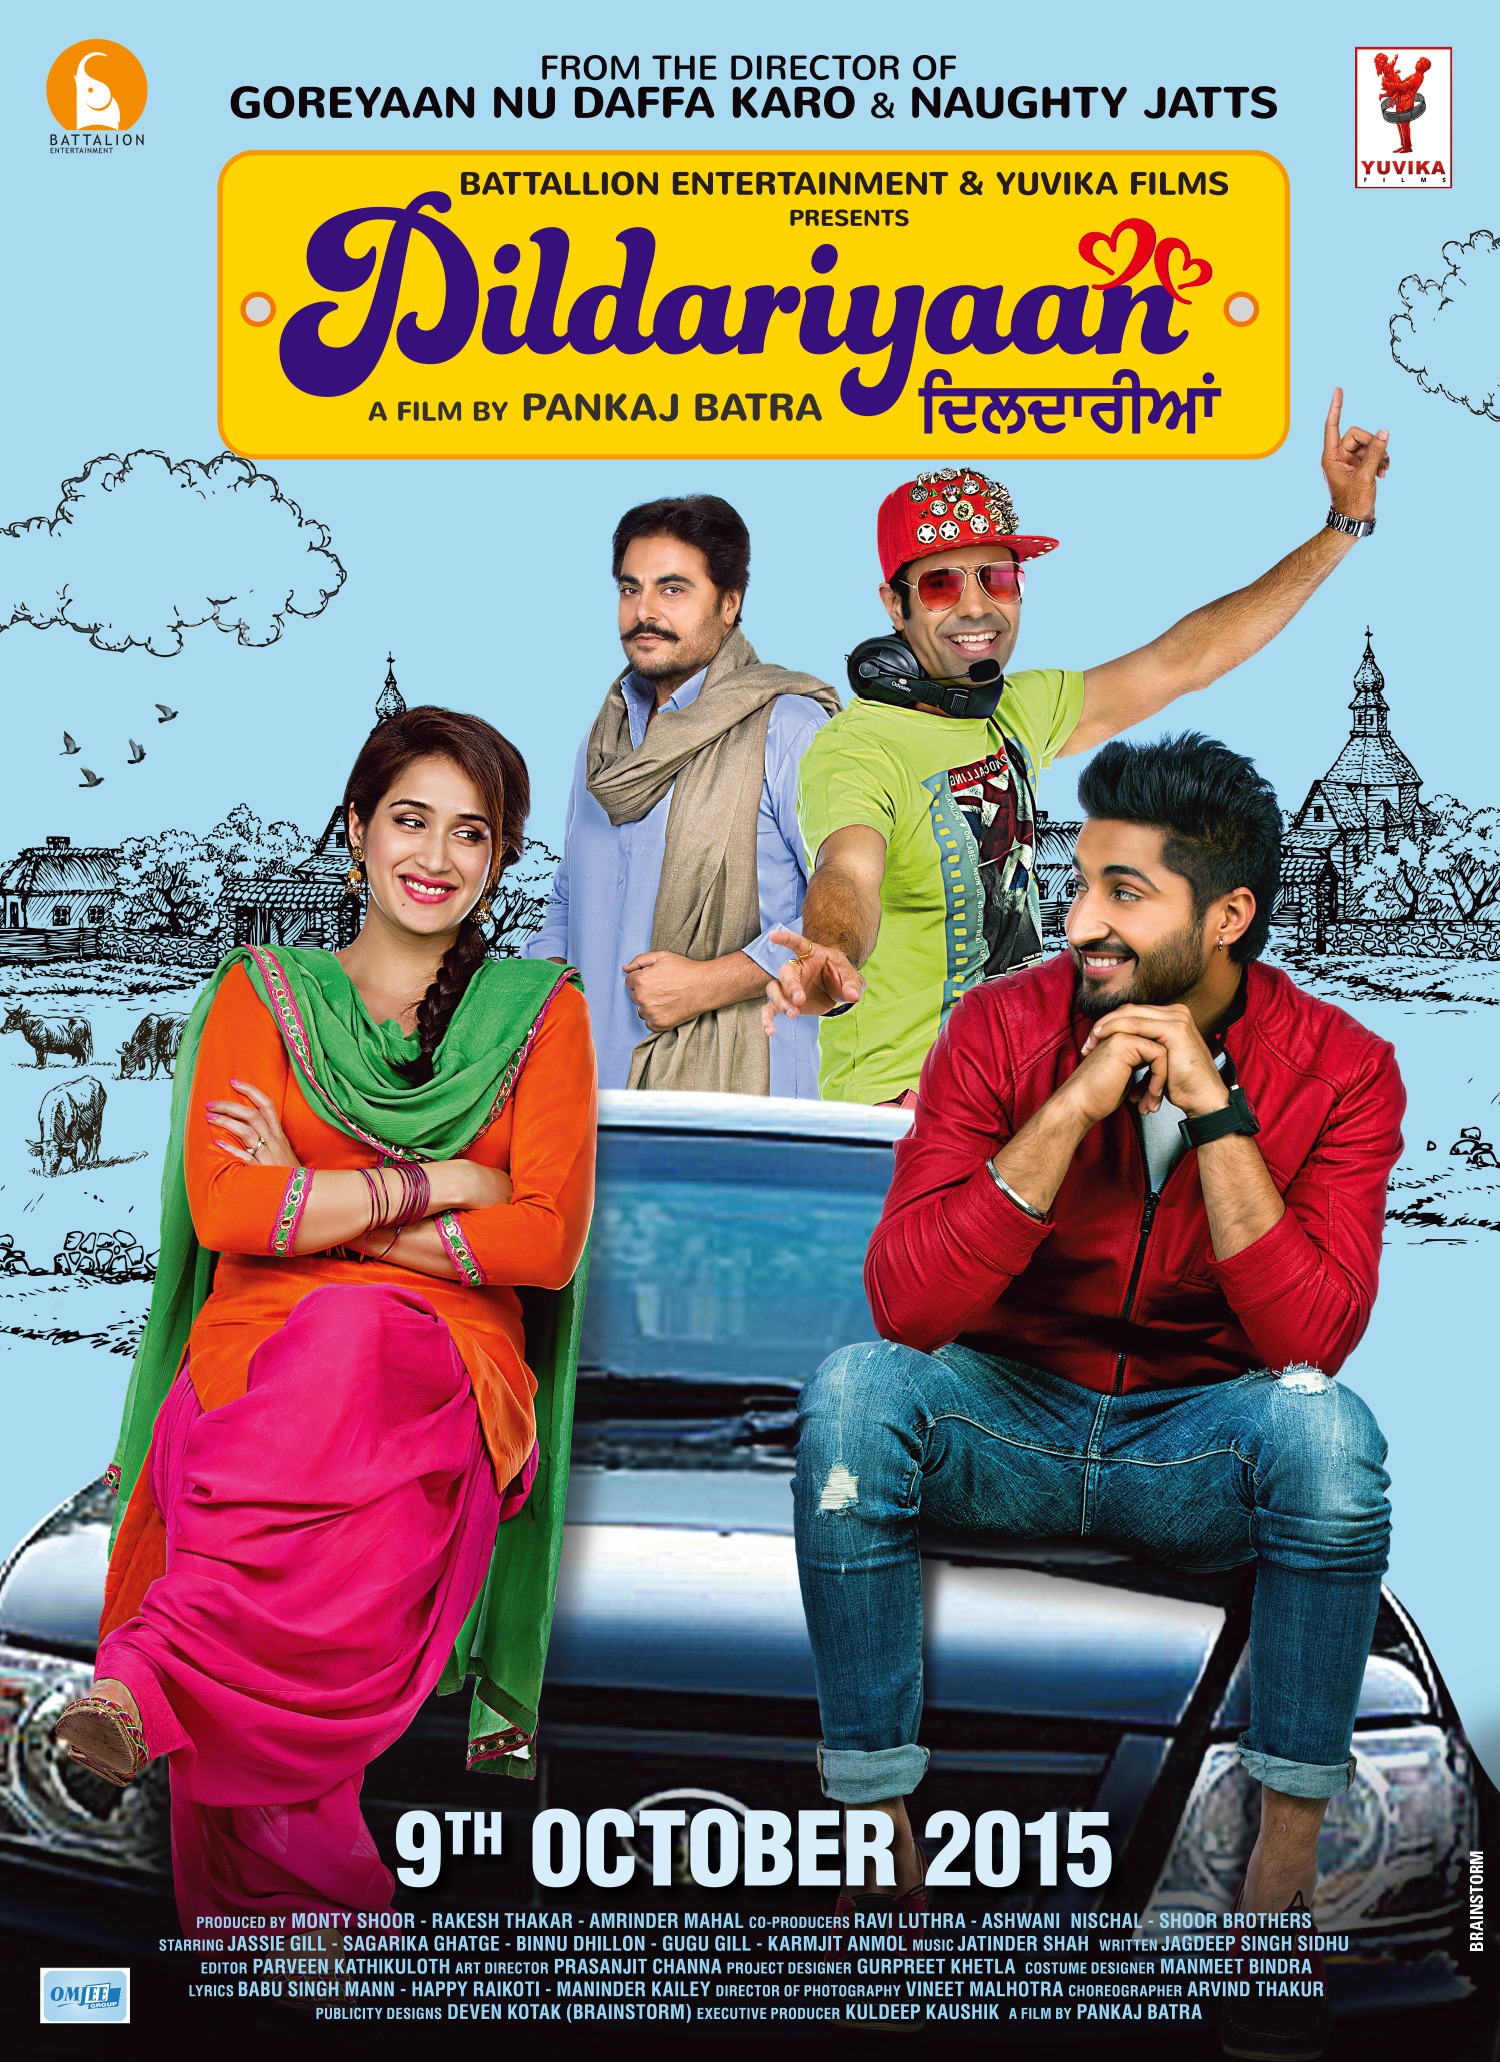 Mega Sized Movie Poster Image for Dildariyaan (#4 of 4)